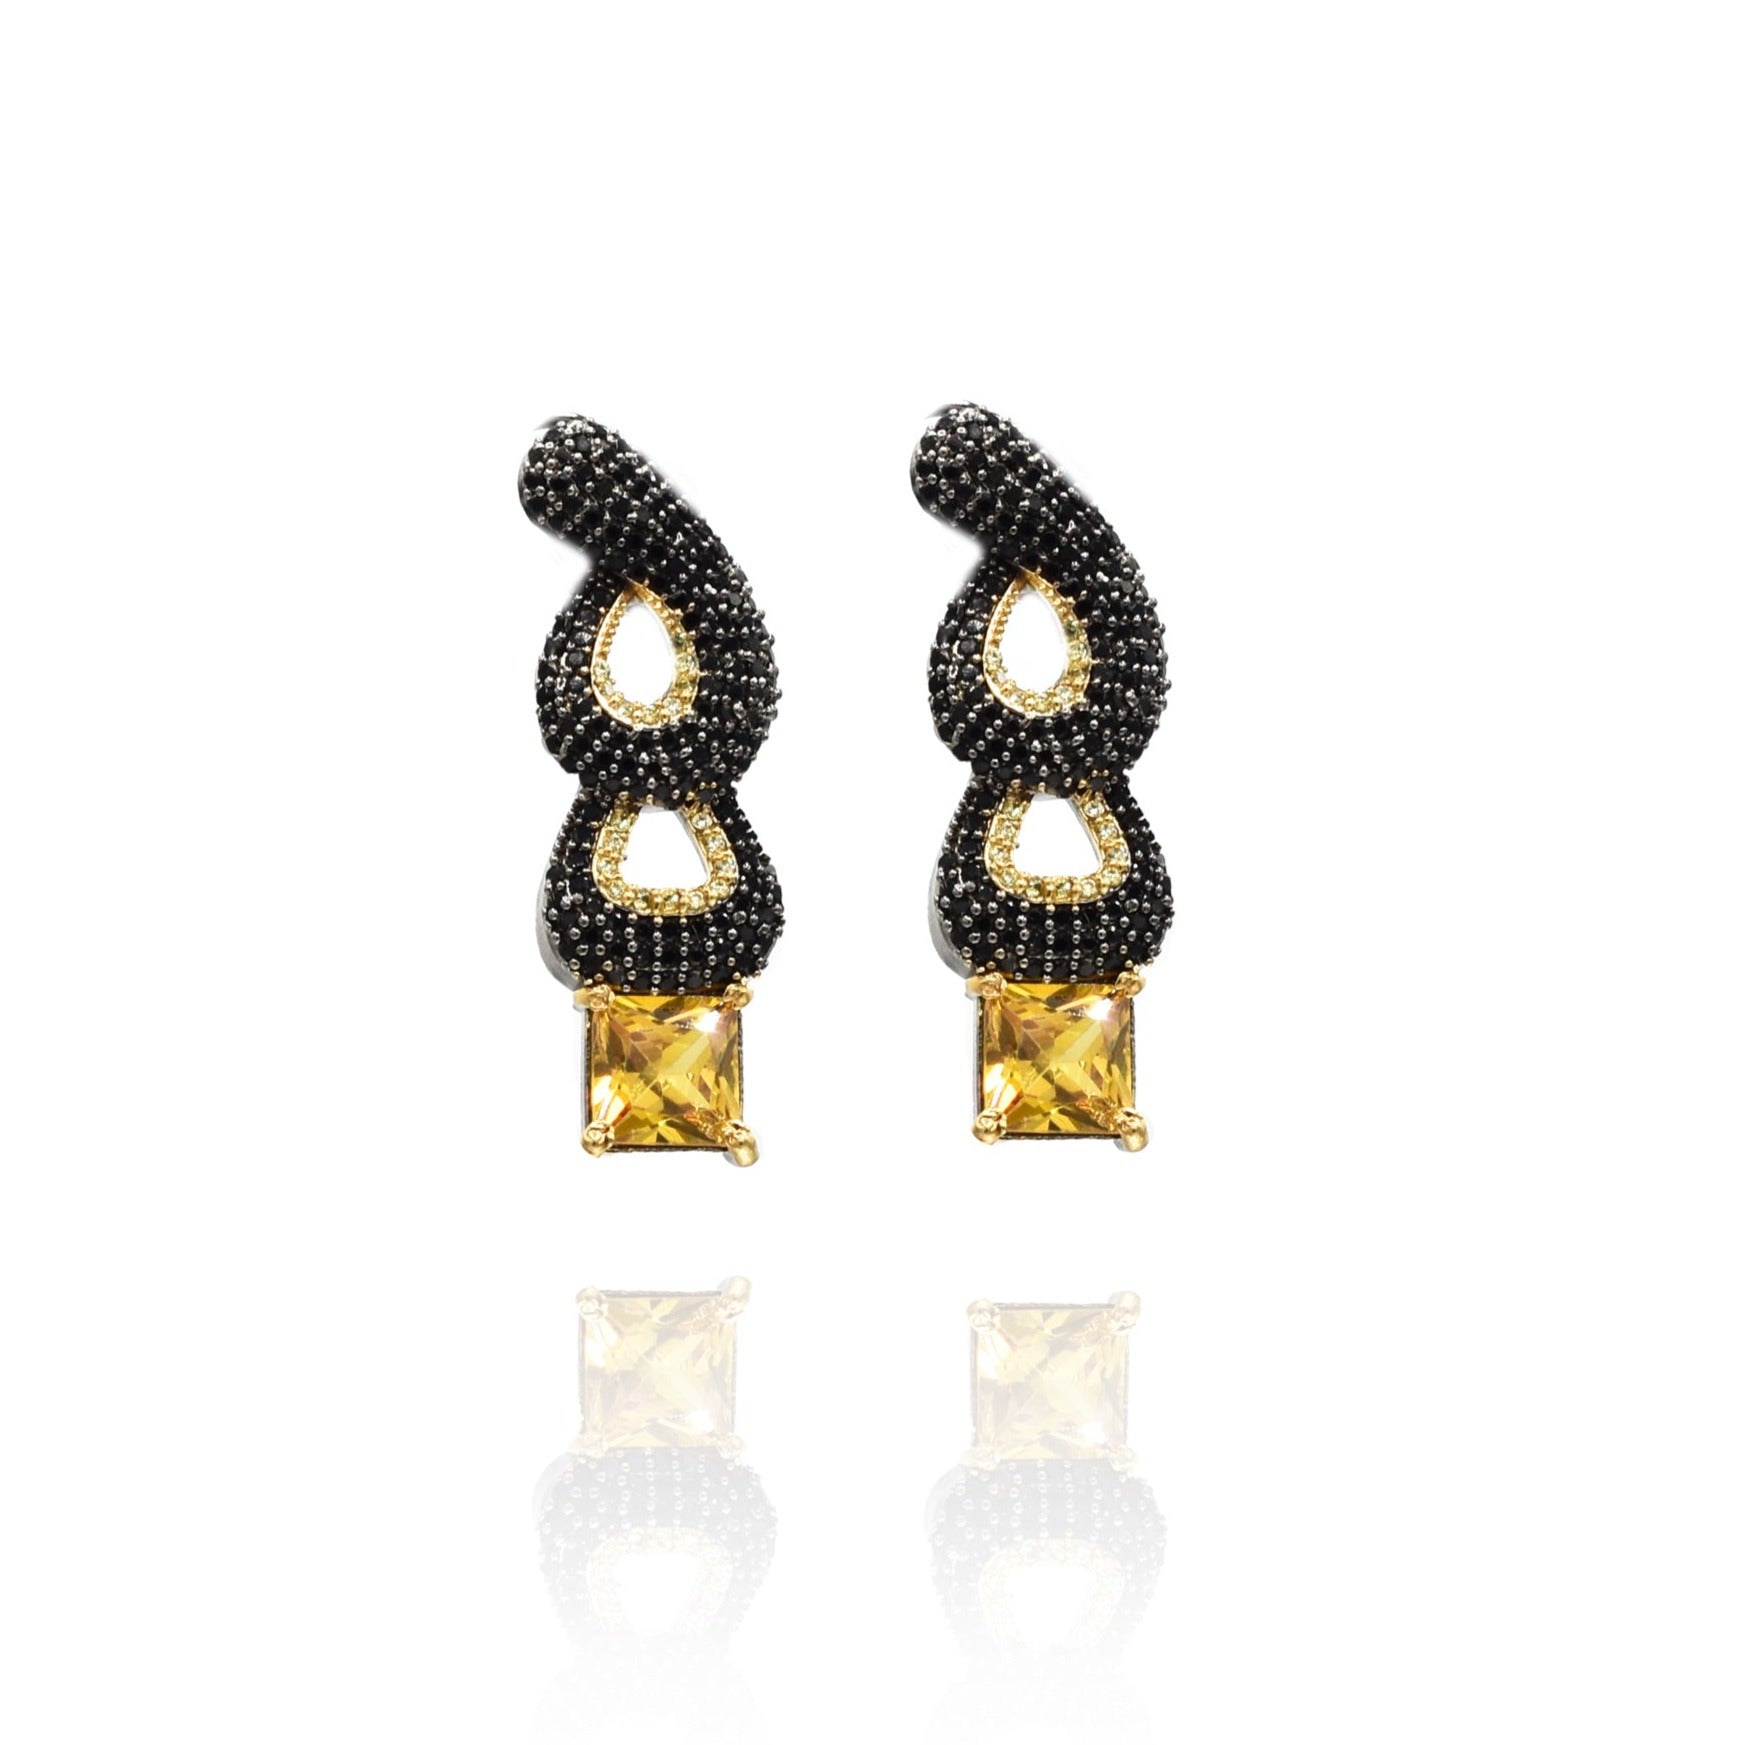 Gohar AD Studded Earrings Black yellow- The Pashm